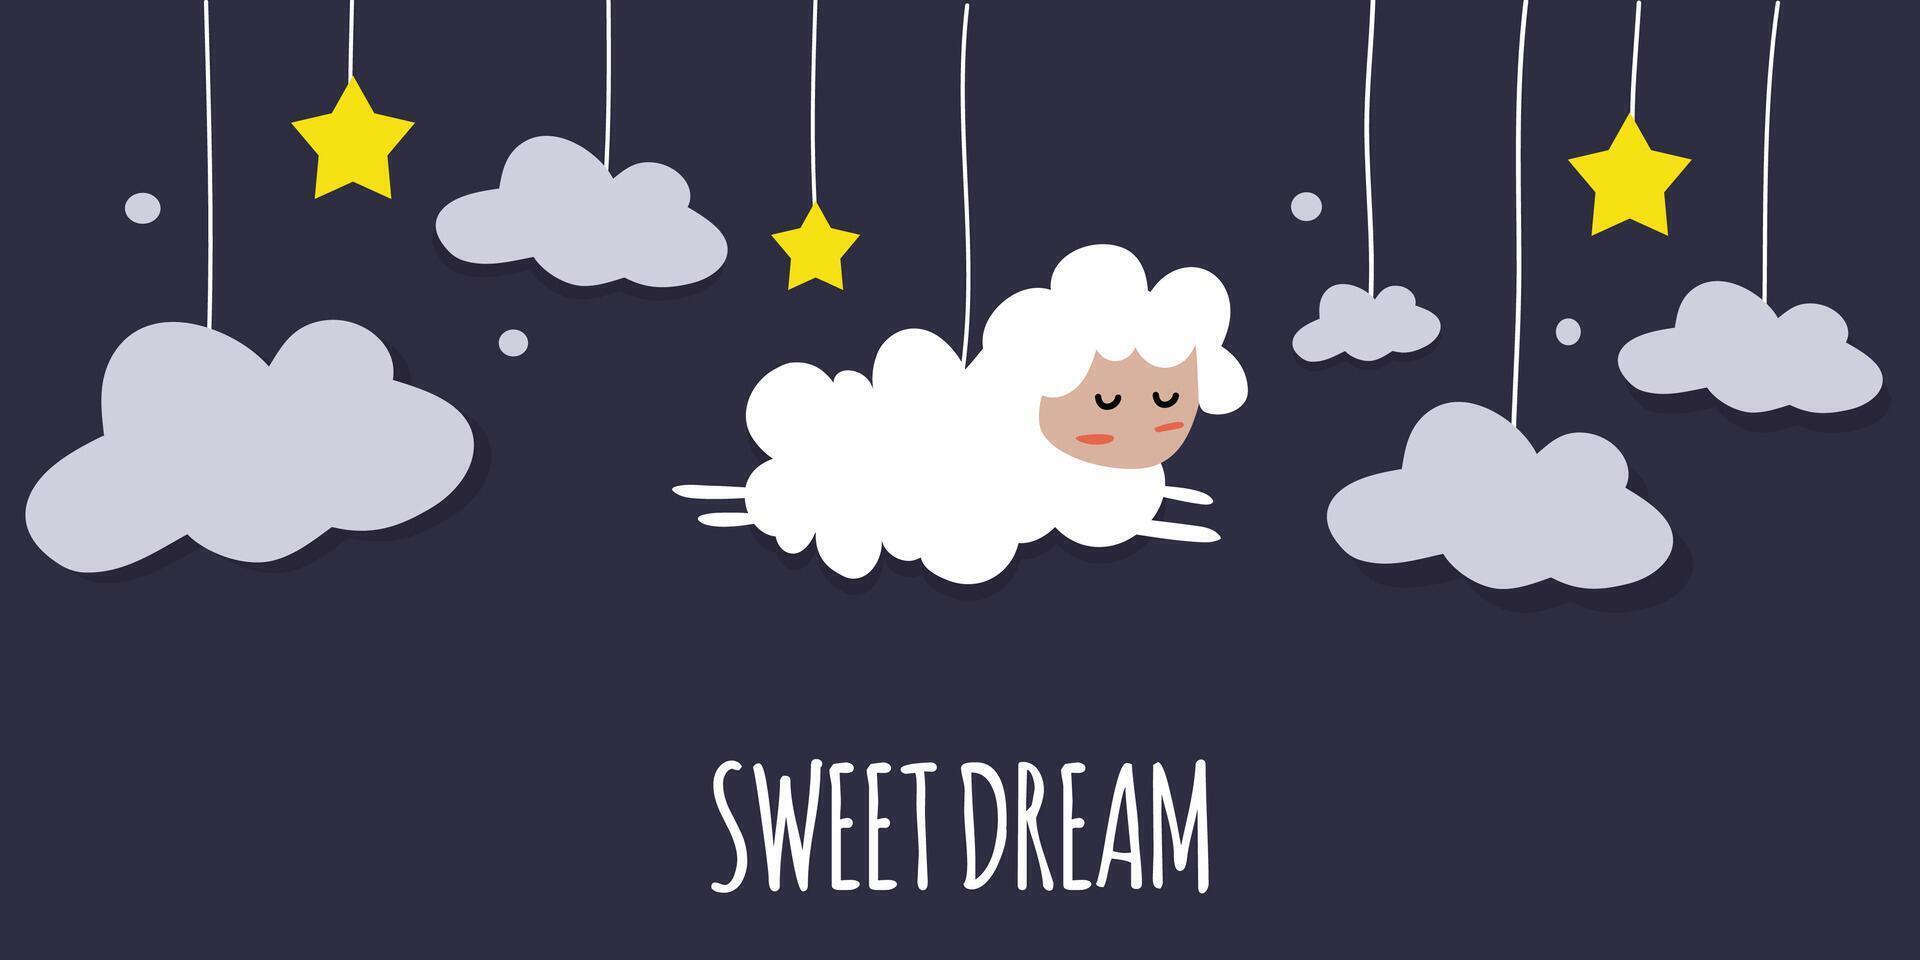 Cute cartoon-style sheep sleeps in the clouds. Wishing you good dreams. vector